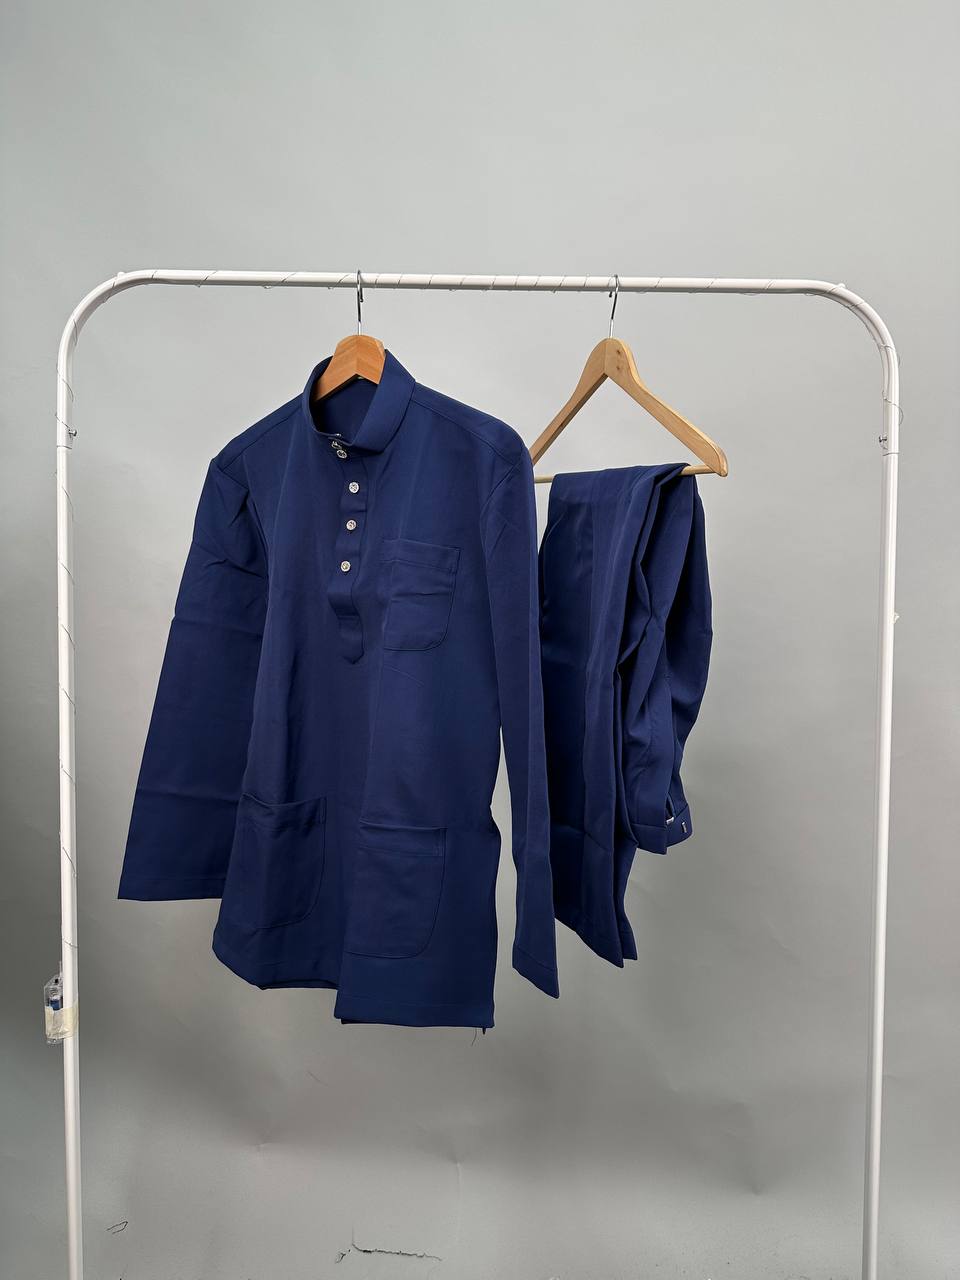 Baju Melayu Zaidan - Navy Blue